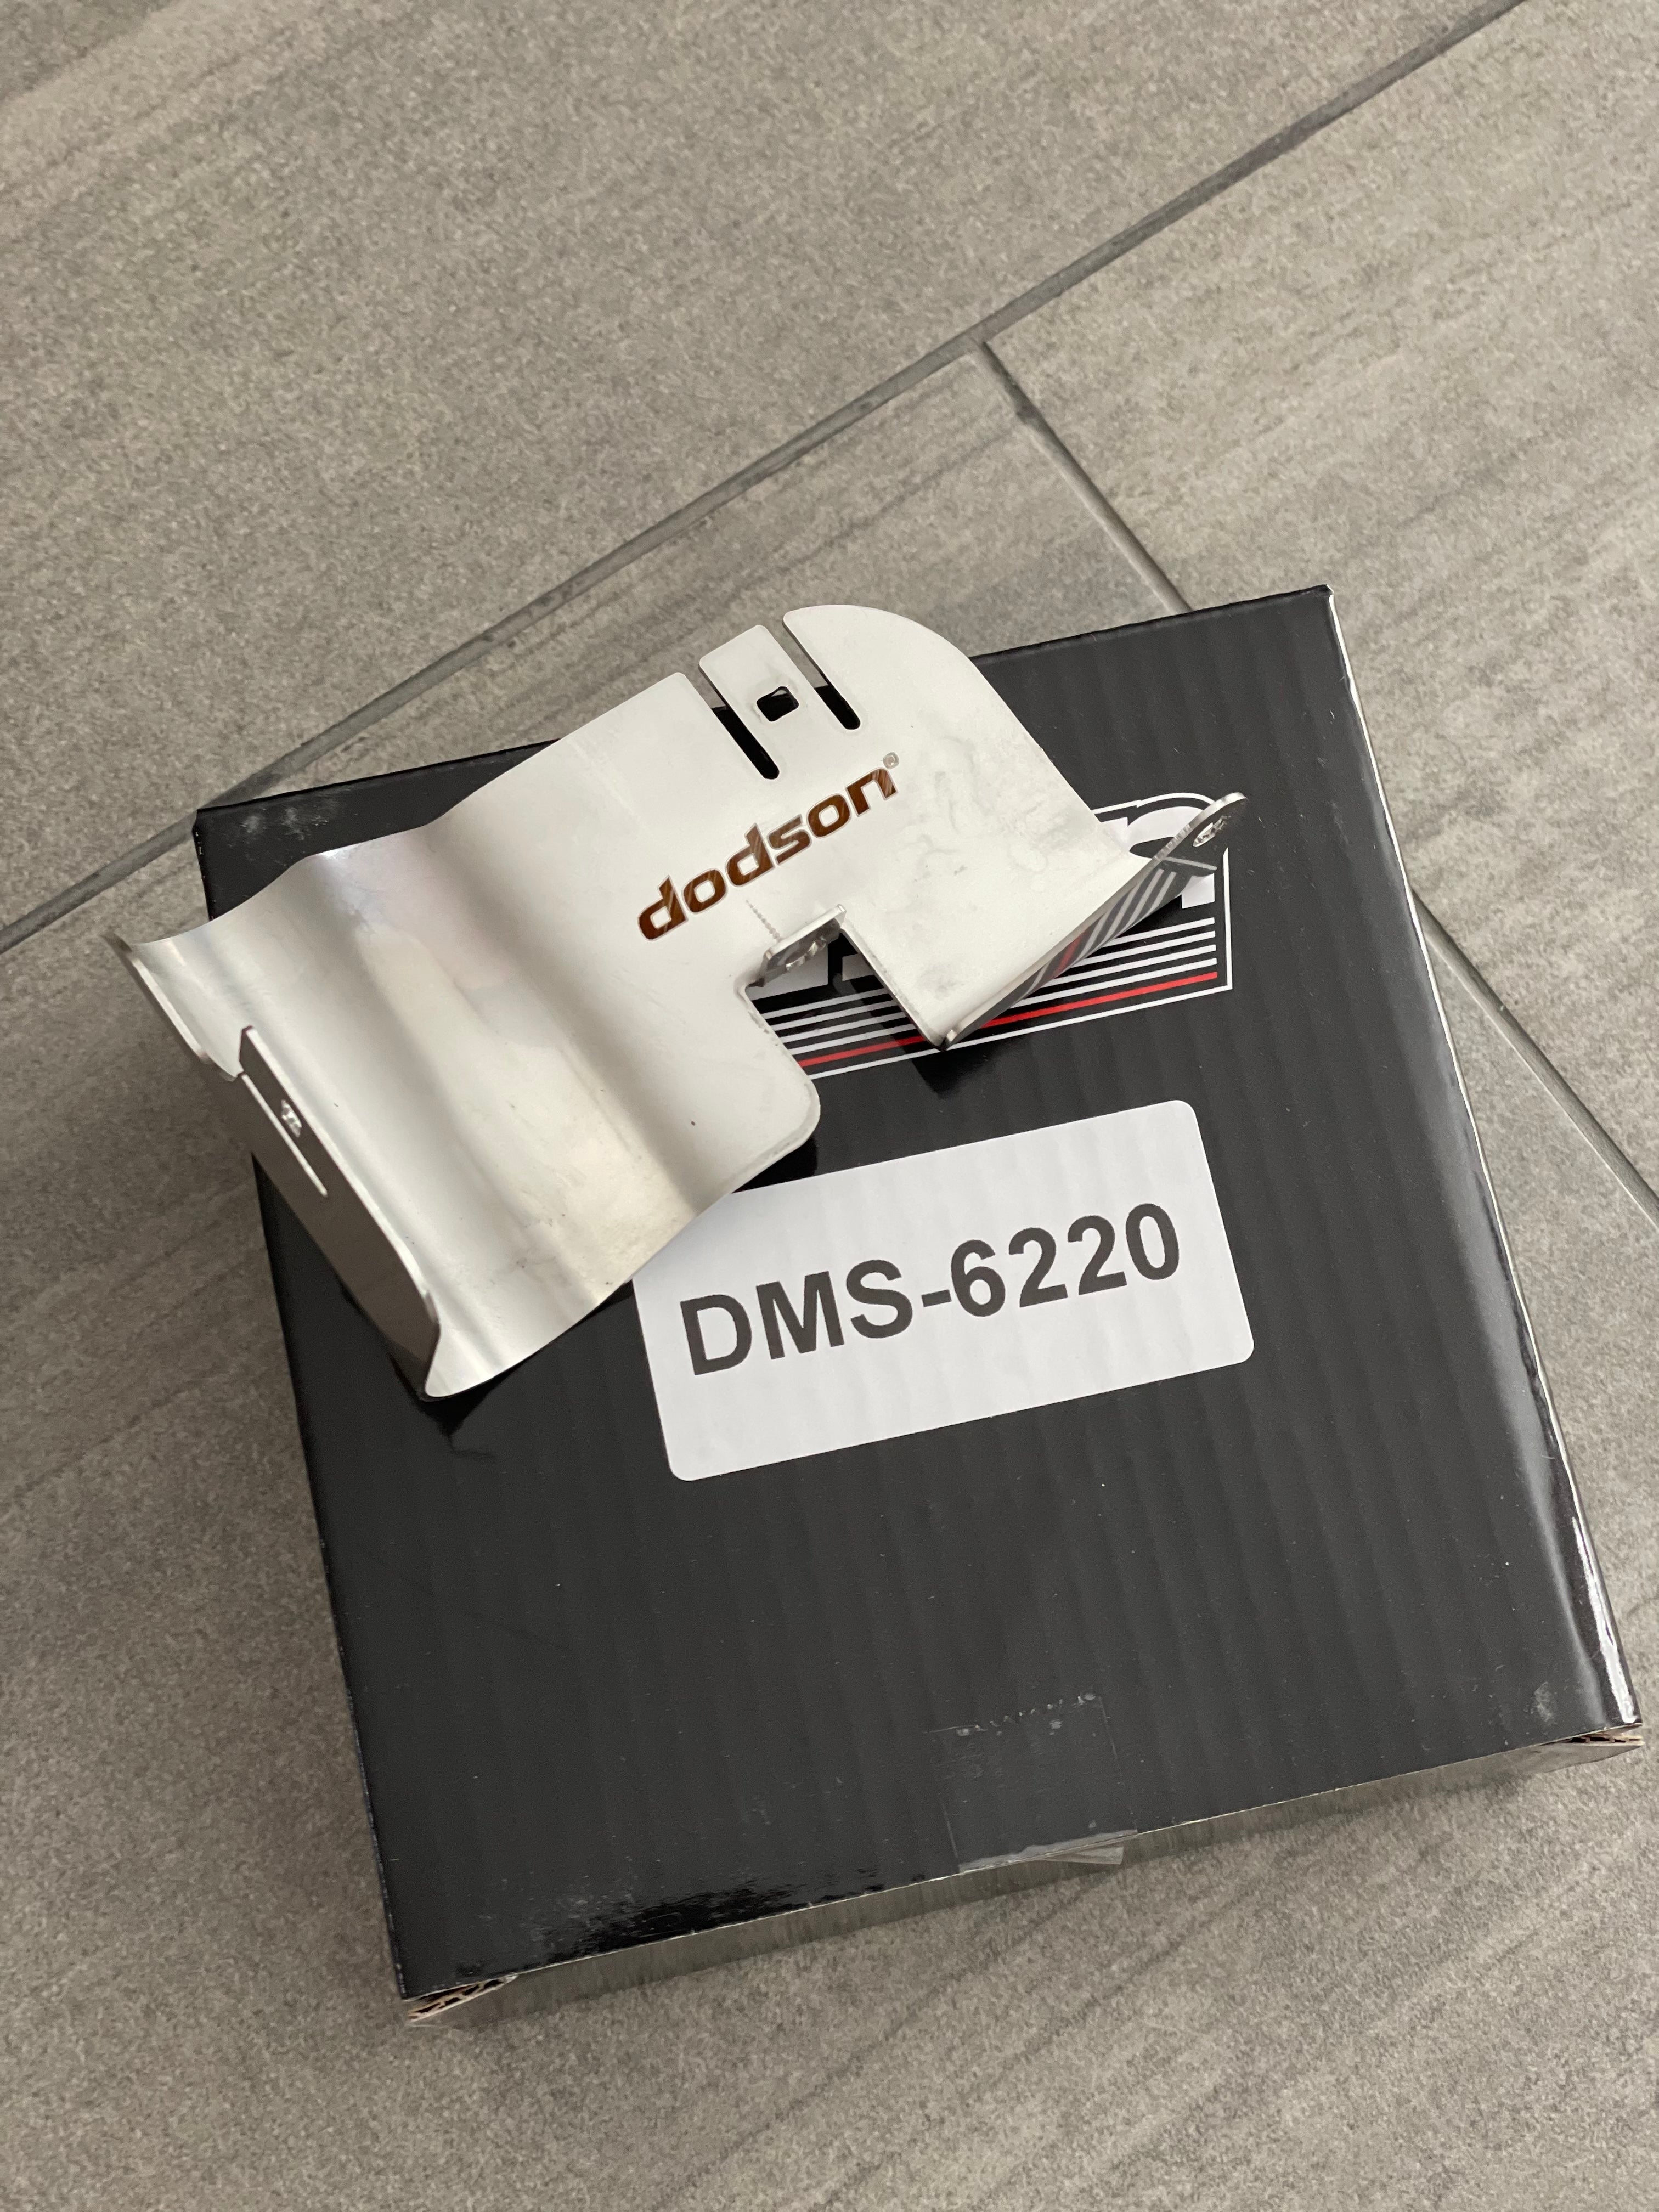 DODSON DMS-6220 Clutch pressure sensor shield for NISSAN GT-R (R35) Photo-0 